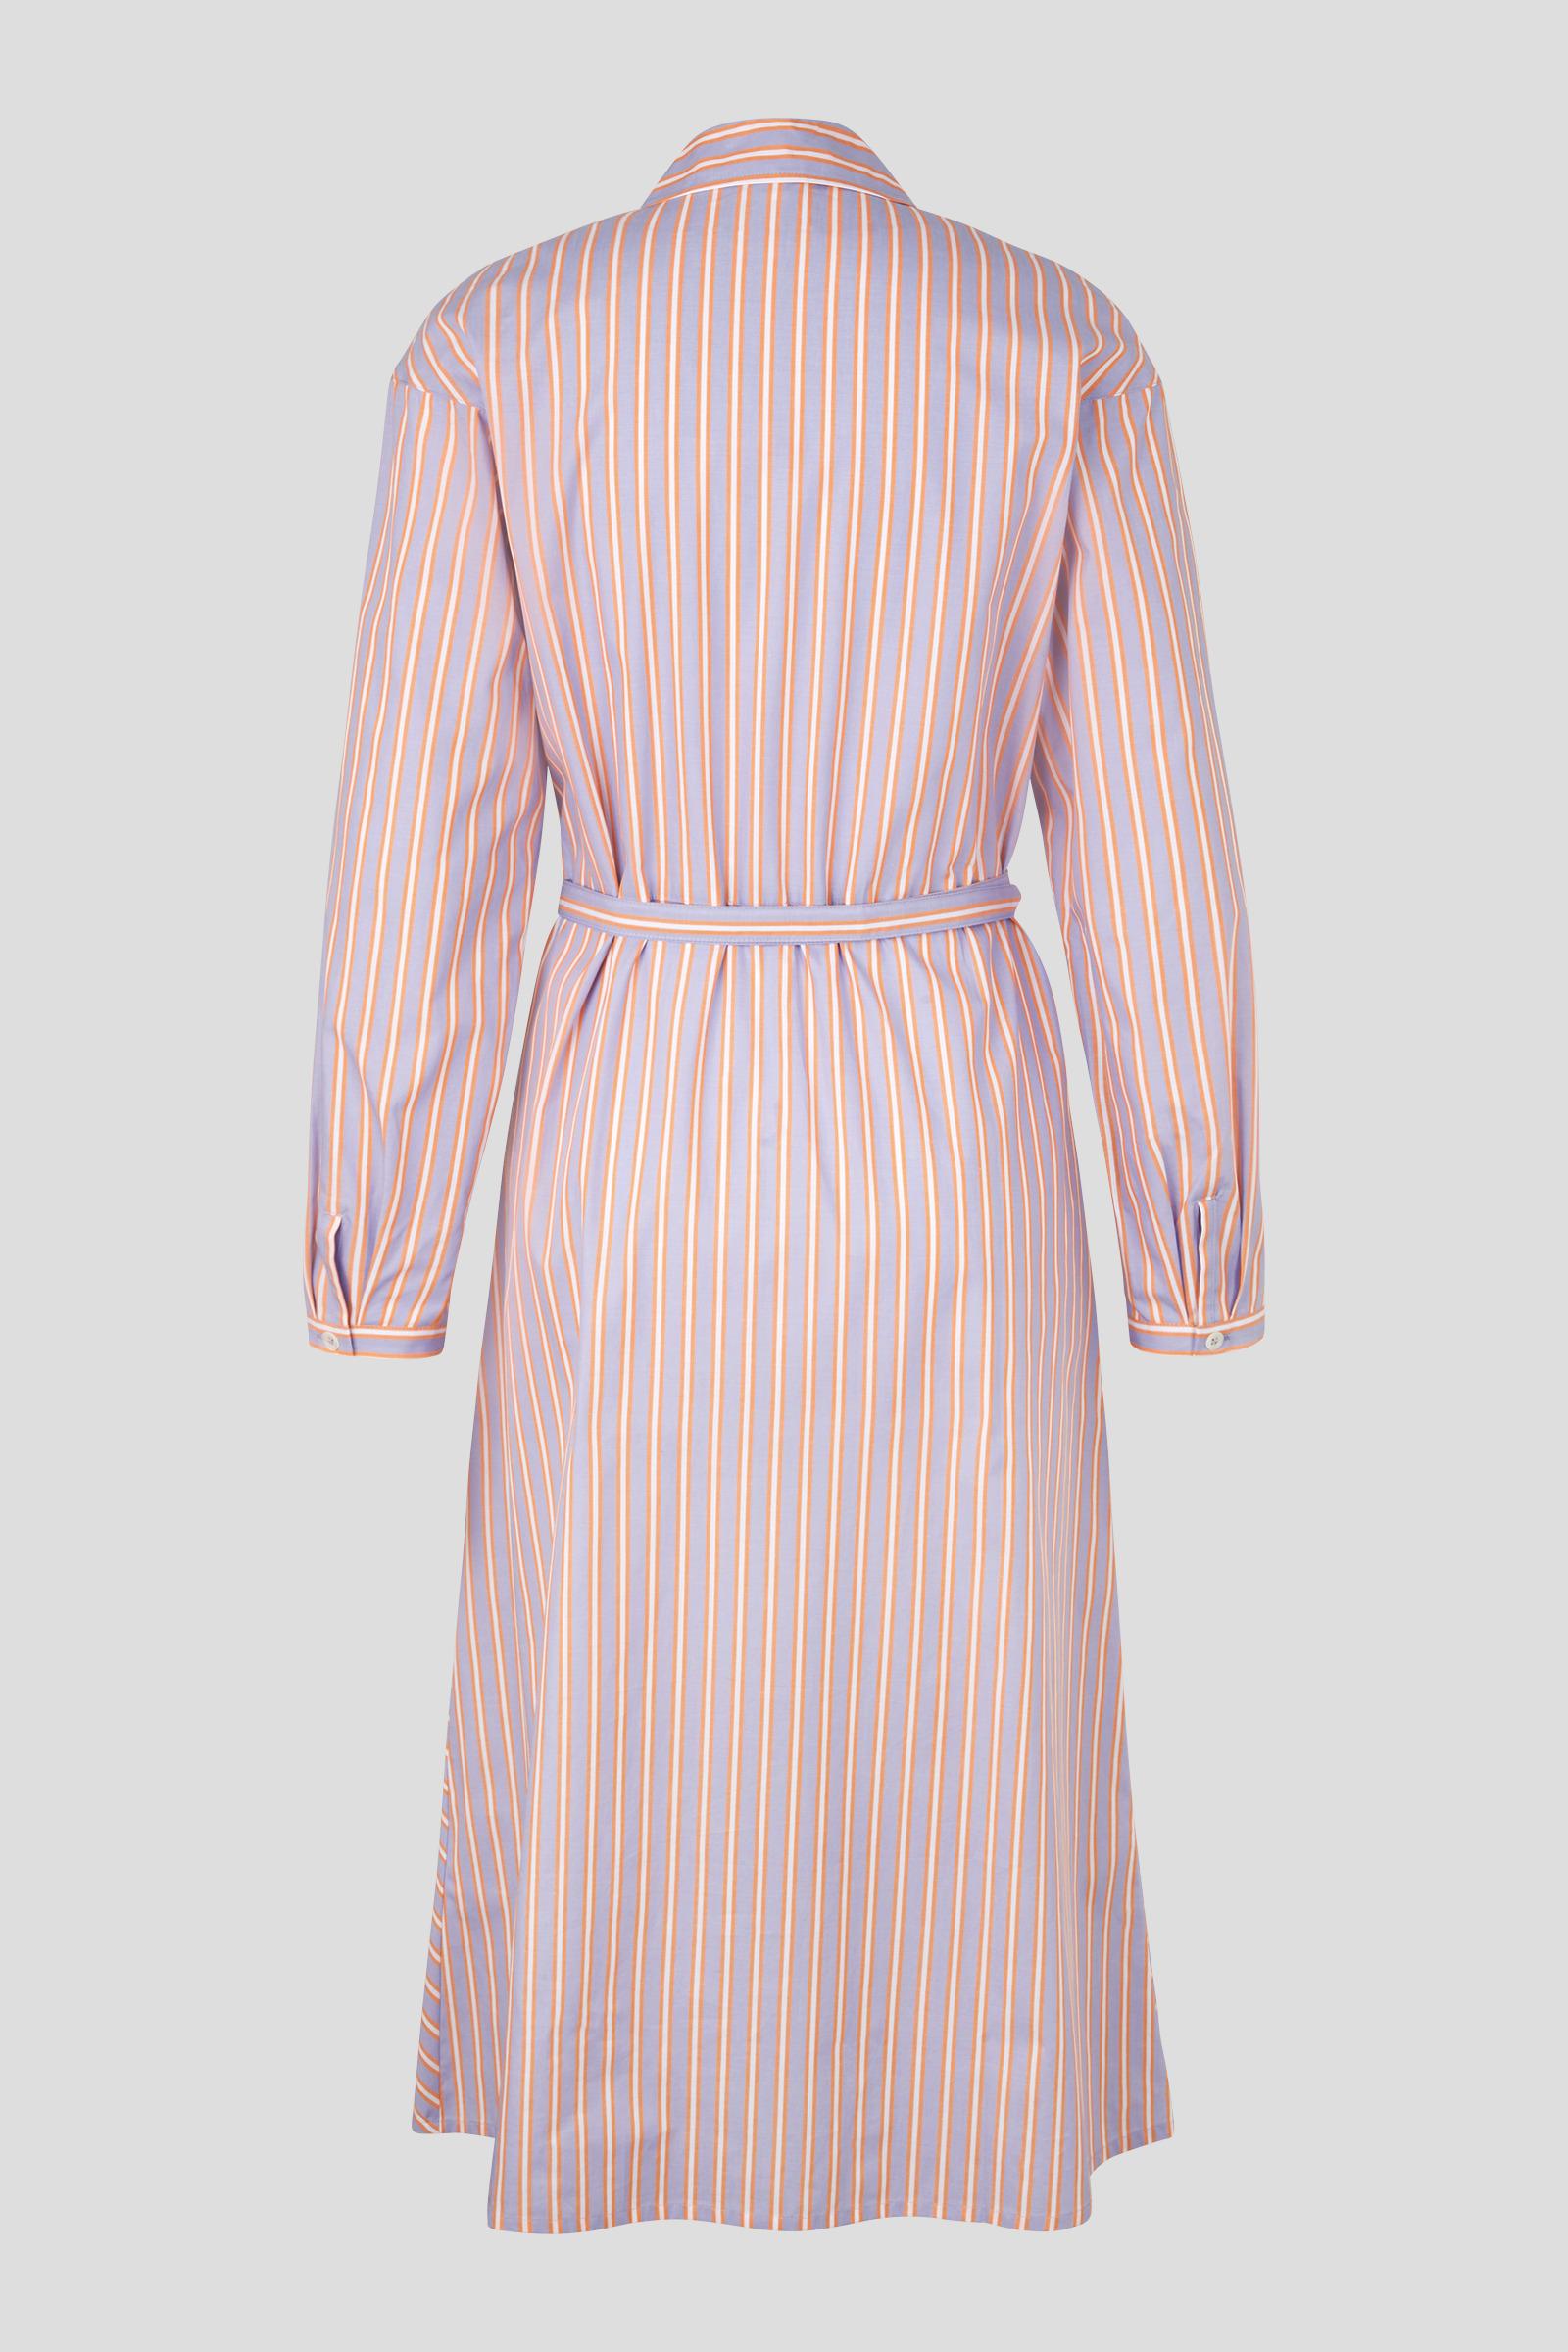 Bogner Ruth Shirt Dress in Pink | Lyst